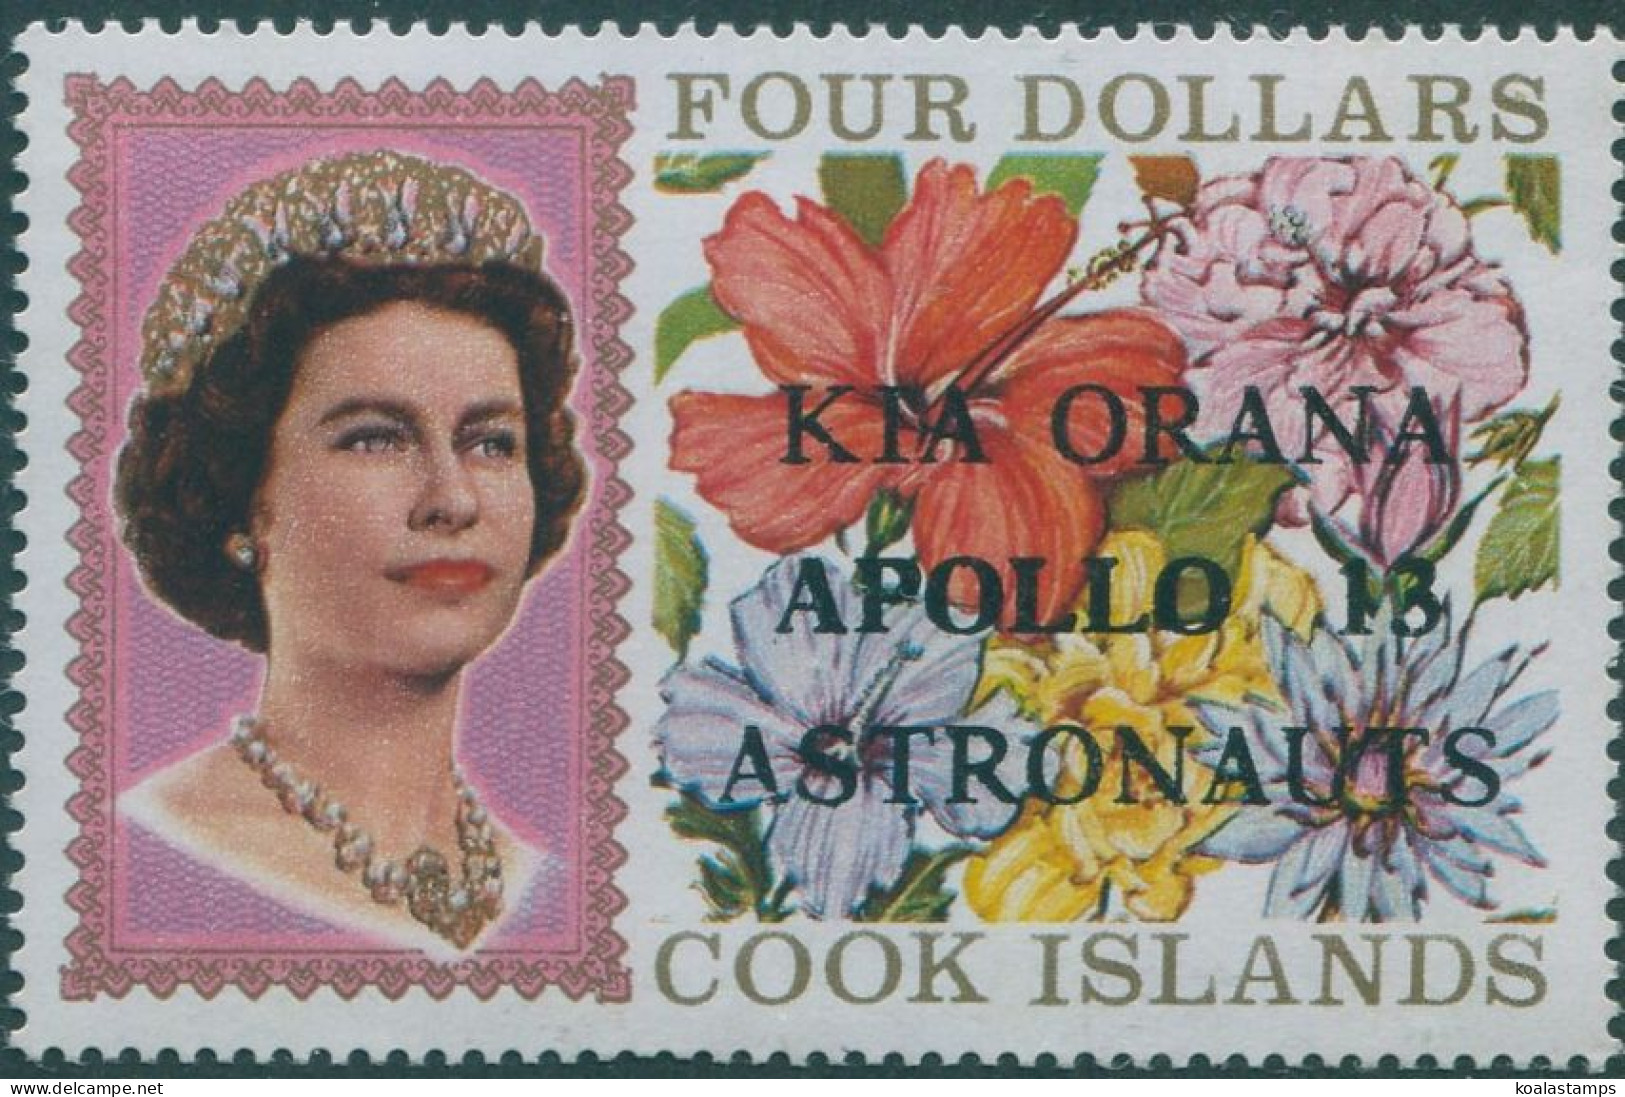 Cook Islands 1970 SG327 $4 QEII Flowers KIA ORANA APOLLO 13 ASTRONAUTS Ovpt MNH - Cookinseln